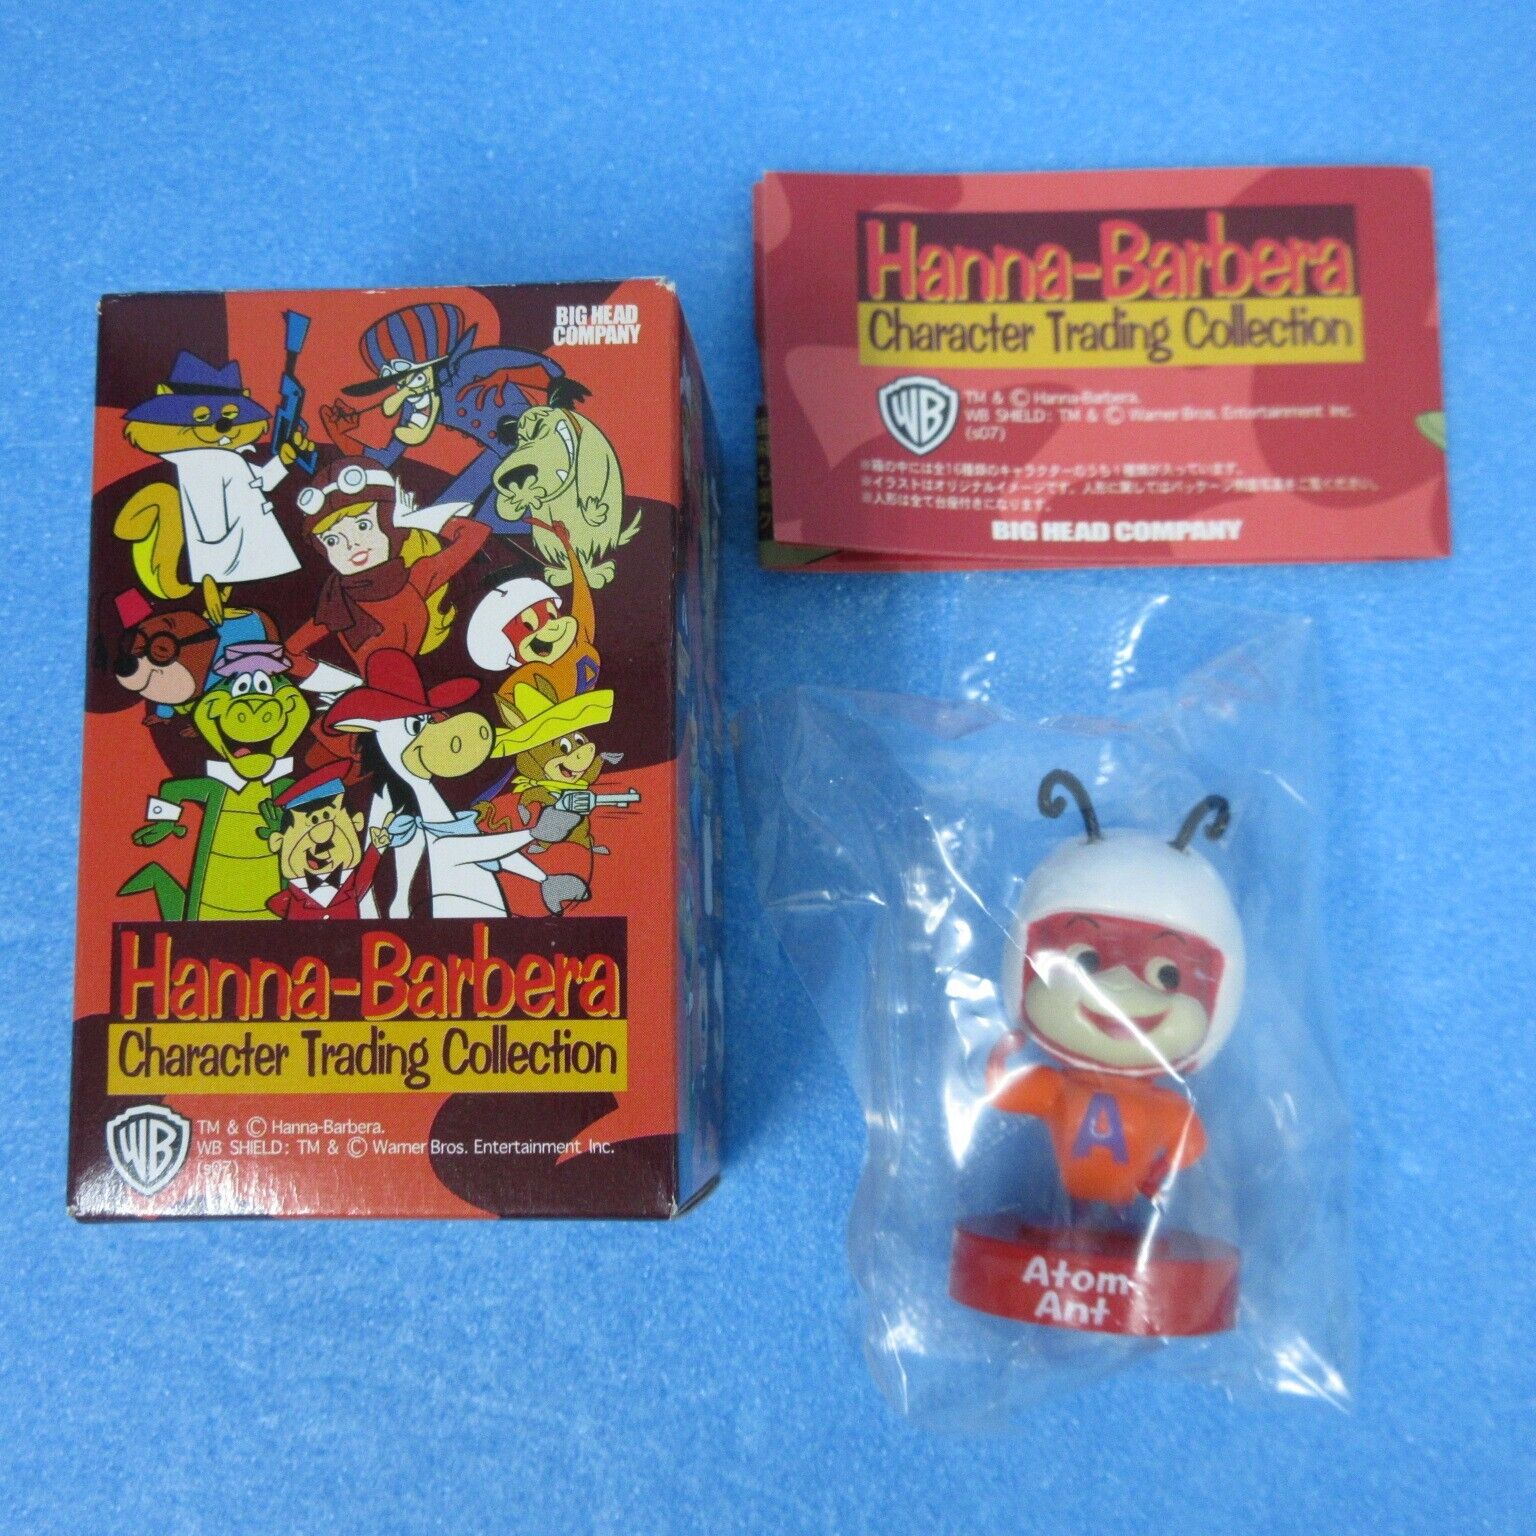 Hanna Barbera Character Trading Collection Atom Ant mini Figure